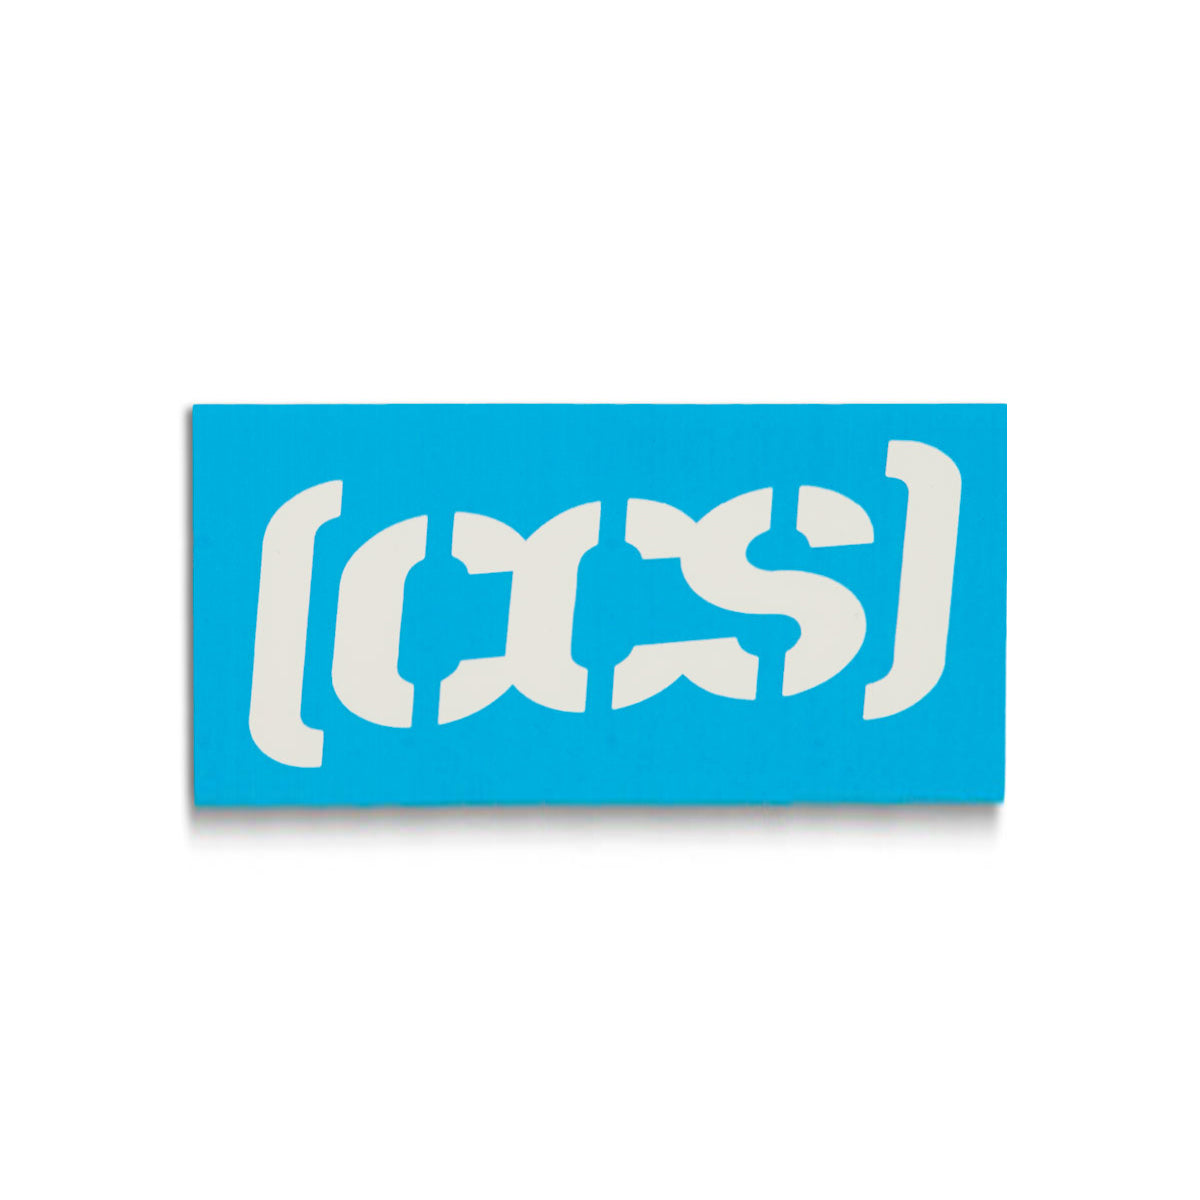 CCS Small Stock Stickers - Cyan image 1